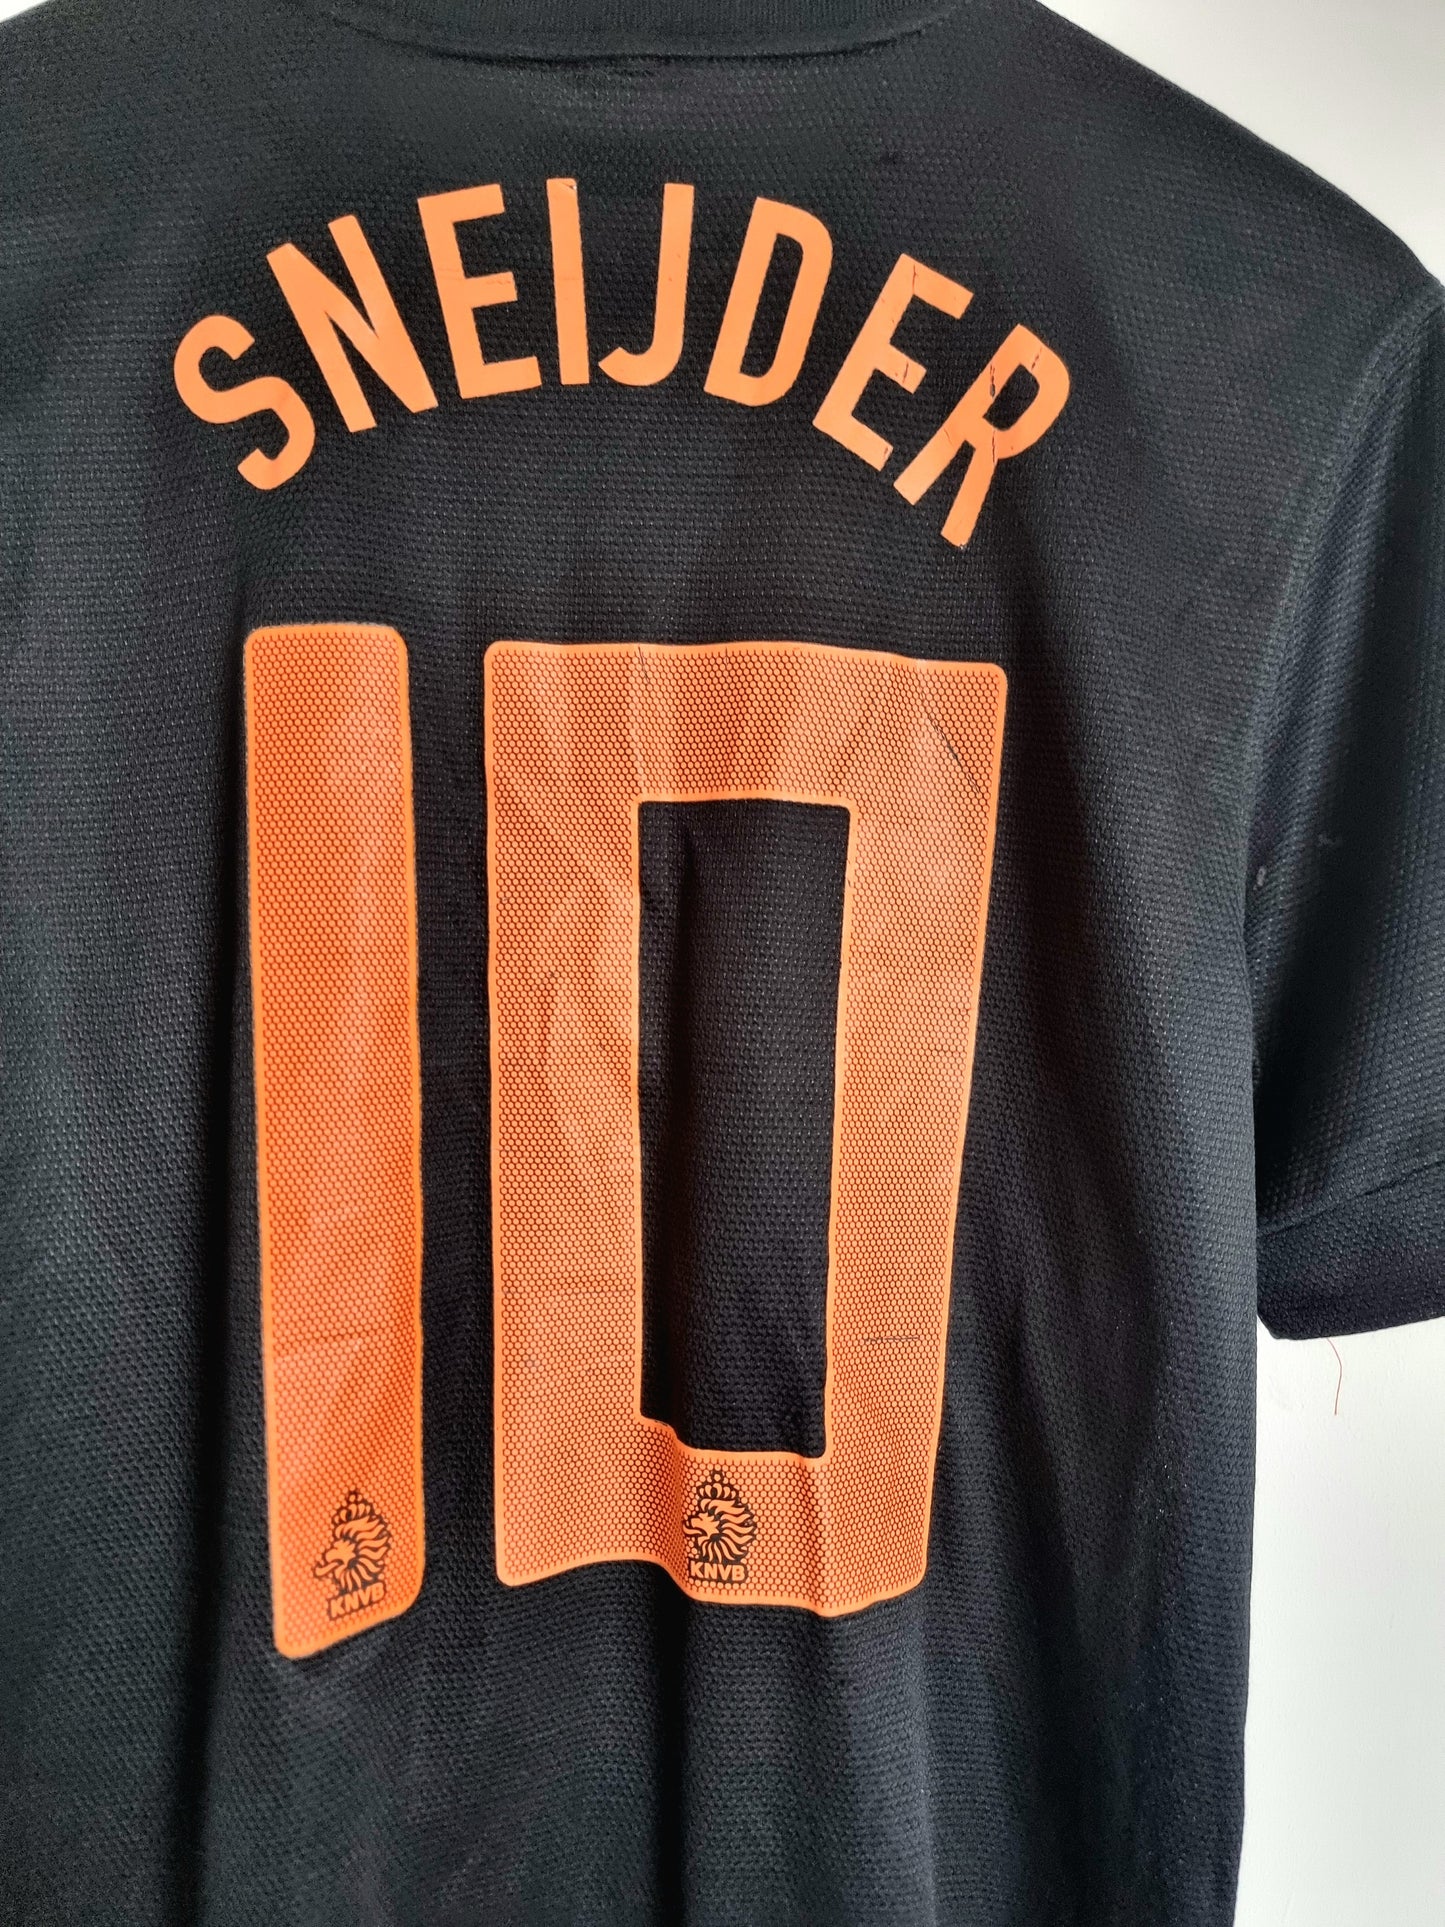 Nike Holland 12/13 'Sneijder 10' Away Shirt Small